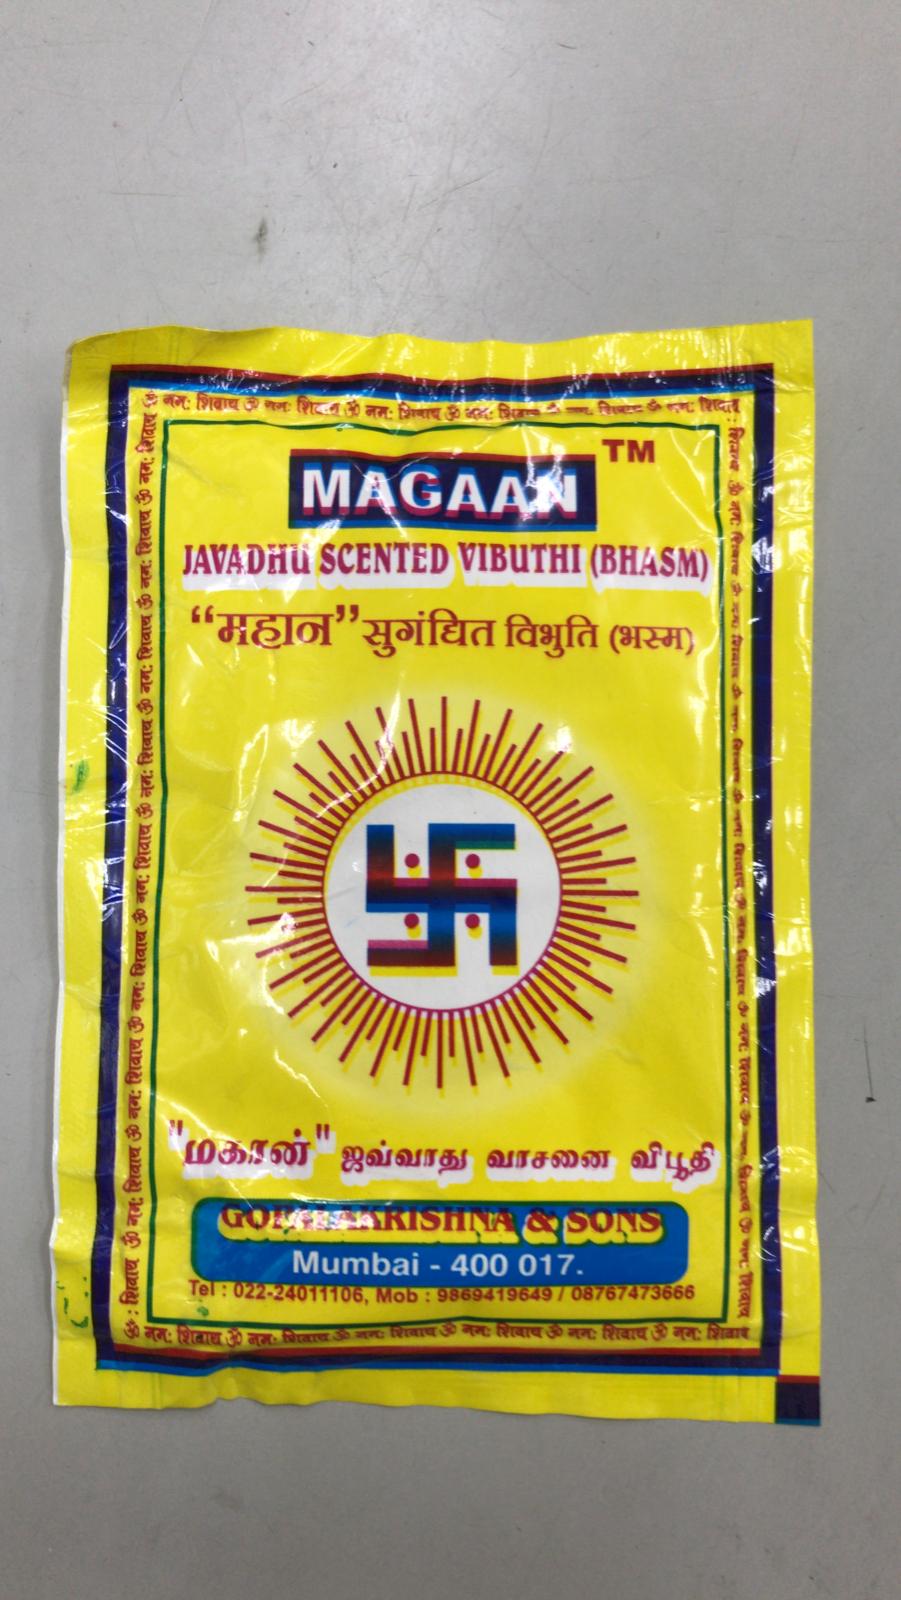 Magaan Javadhu Scented Vibhuti (Bhasm) 60 g